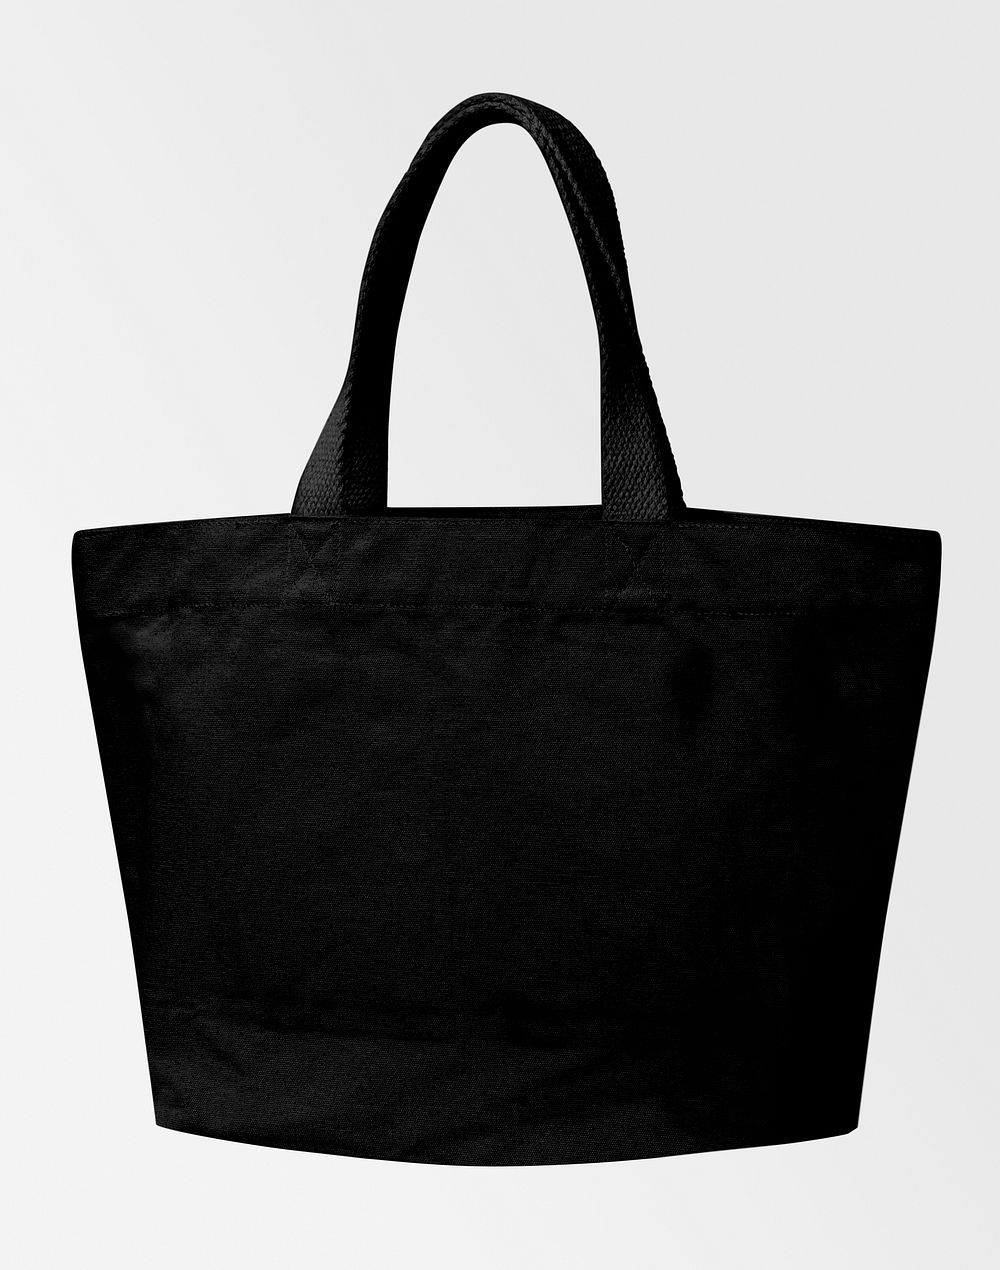 Black canvas bag mockup, eco product psd